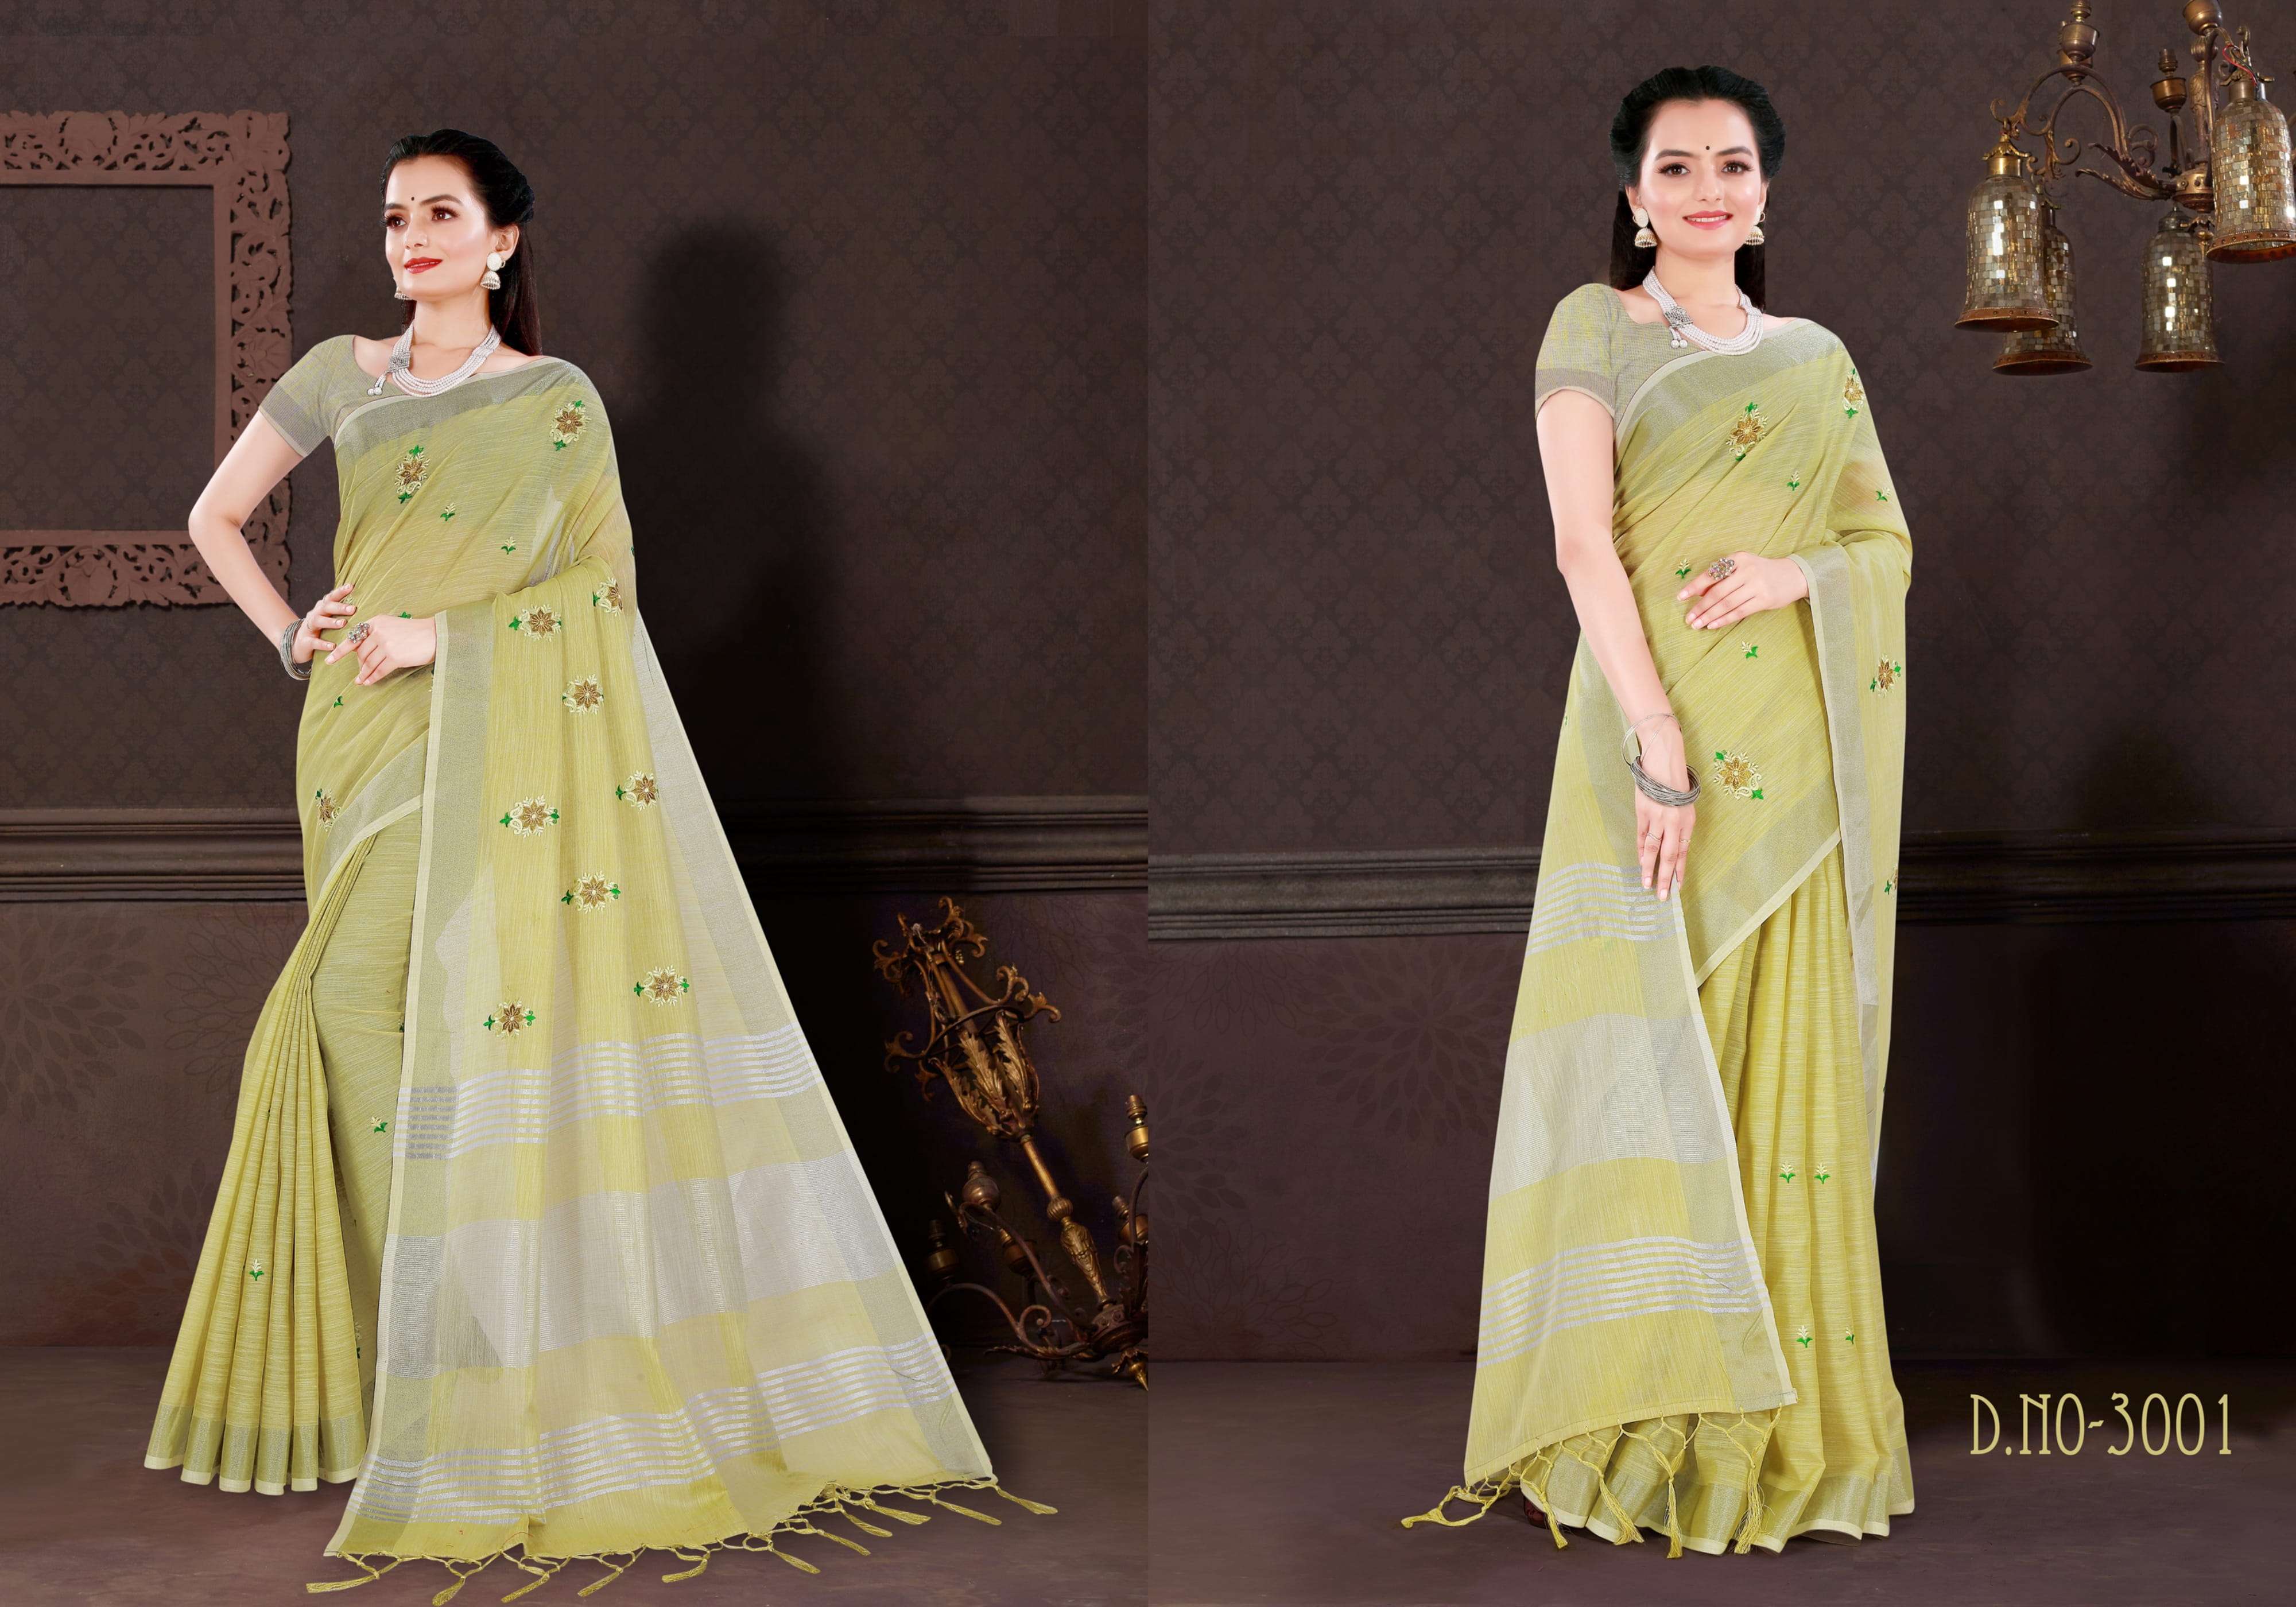 sangam prints swara series 3001-3006 linen embroidery saree